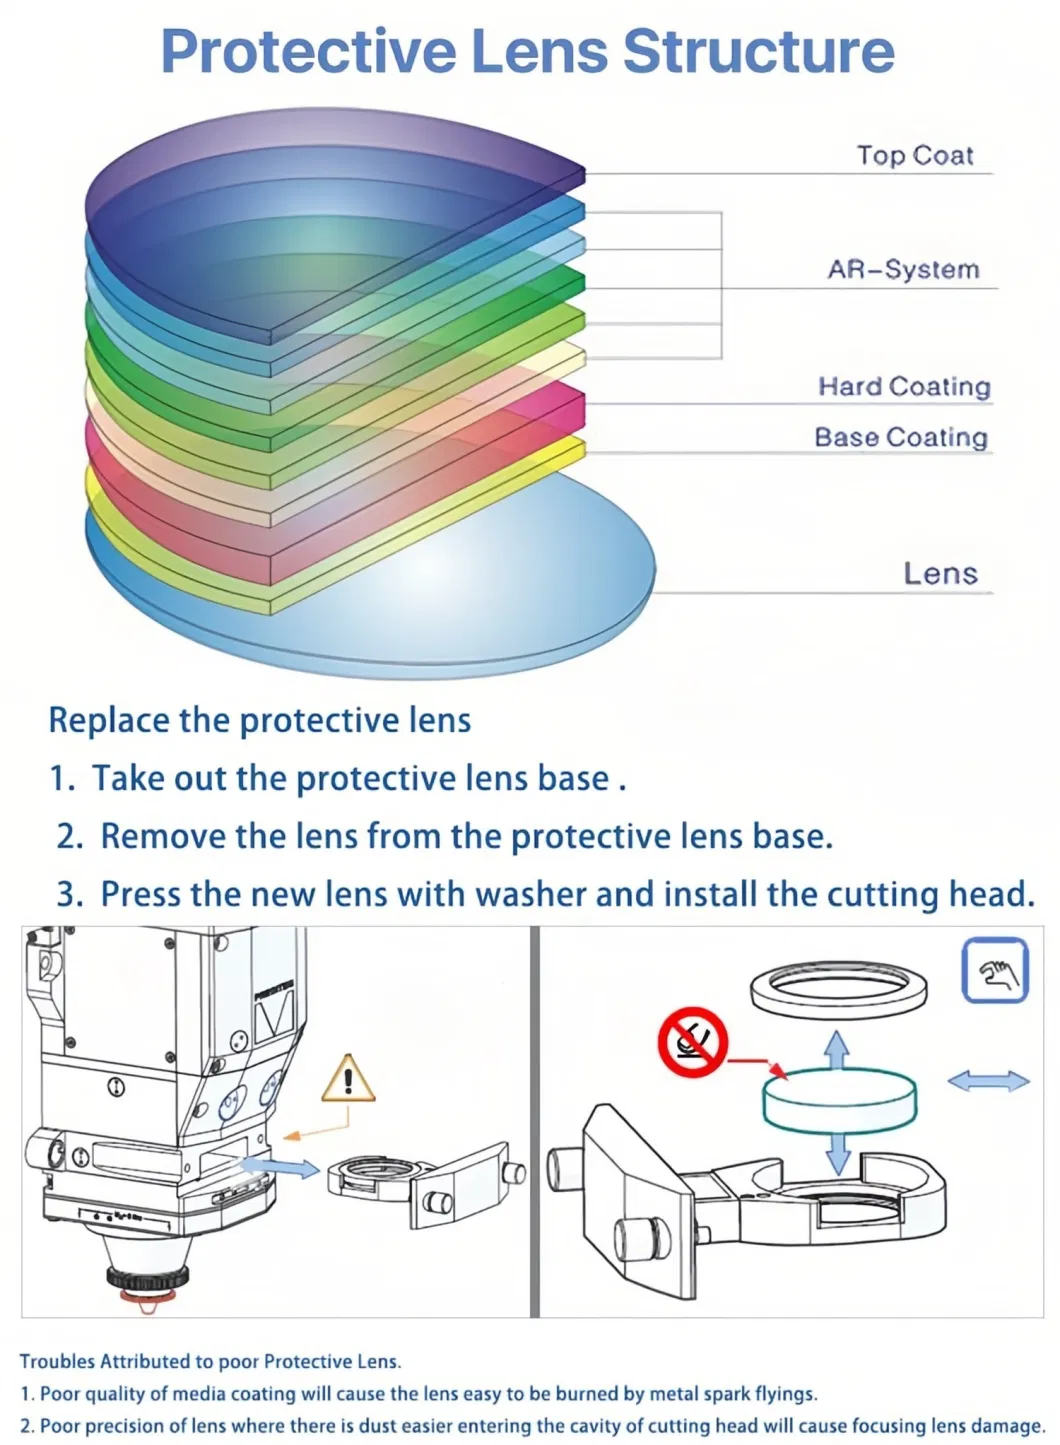 Startnow Optical Quartz Original Protection Precitec Fiber Laser Protective Window Lens for Fiber Cutting Welding Machine Head